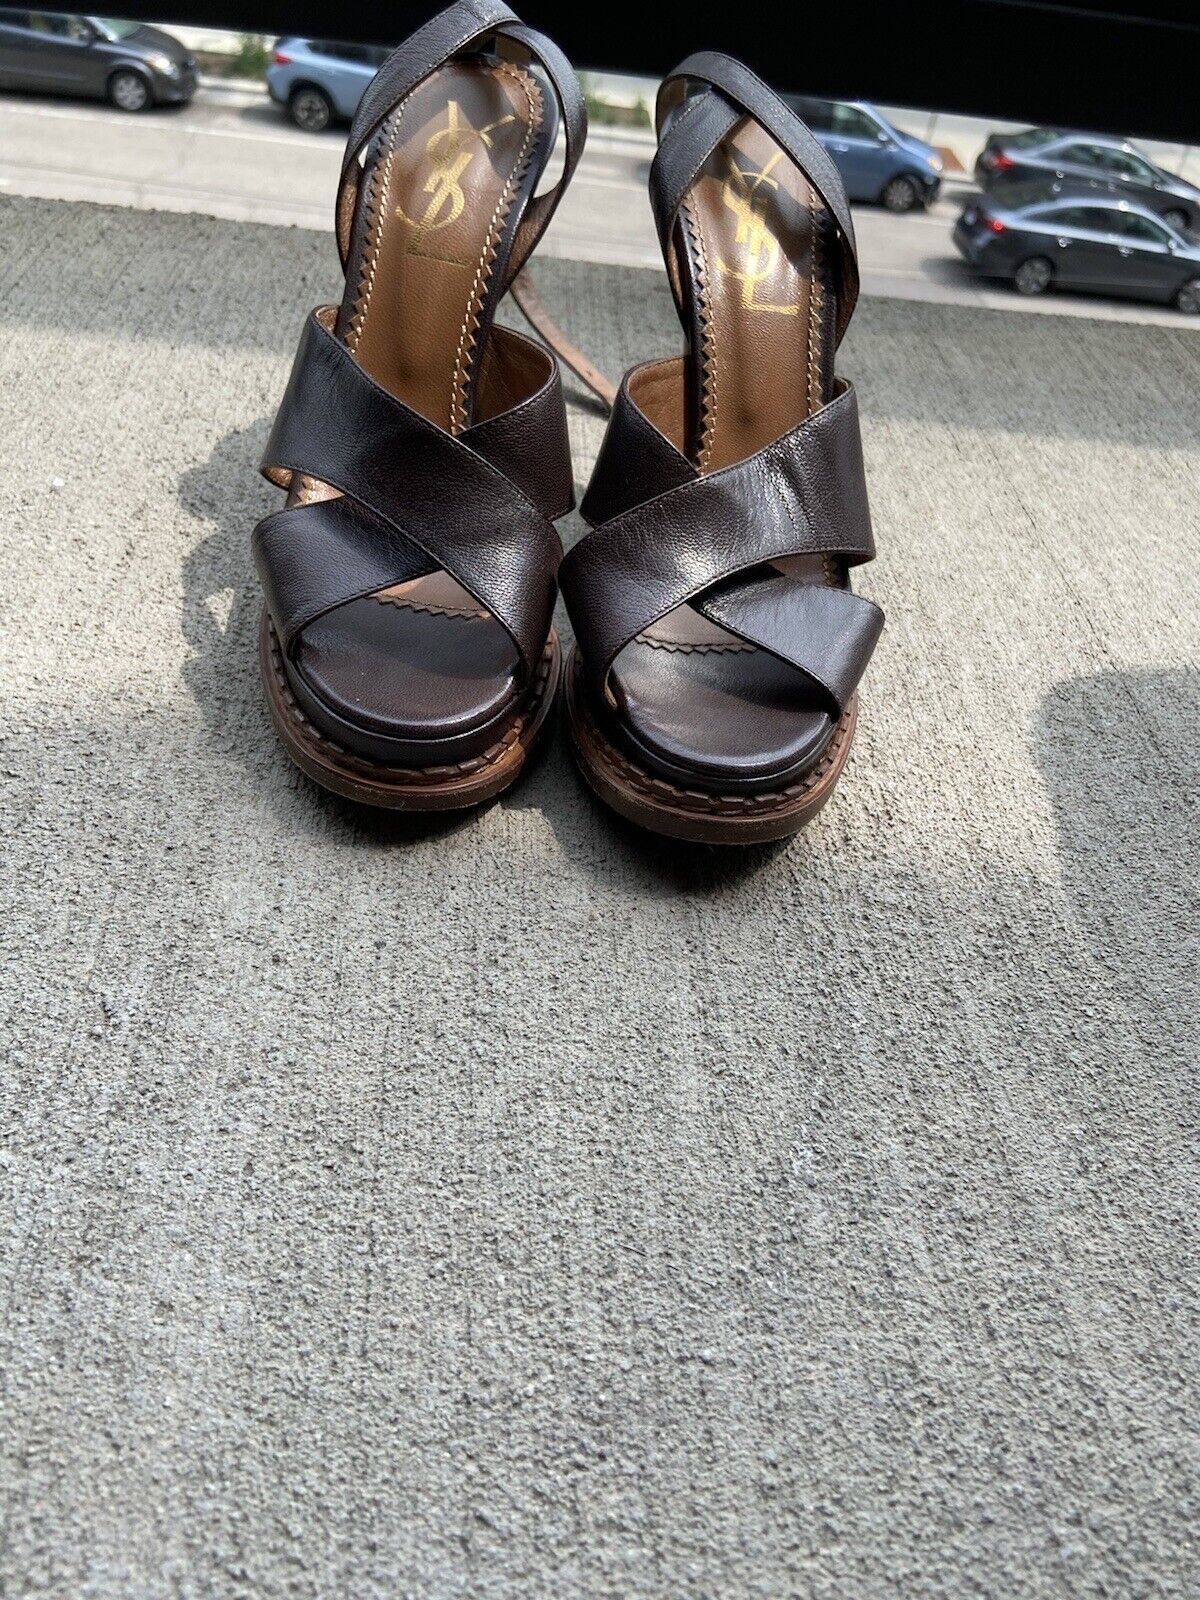 $800 YSL Brown Platform Sandal Heels 37.5 - image 3